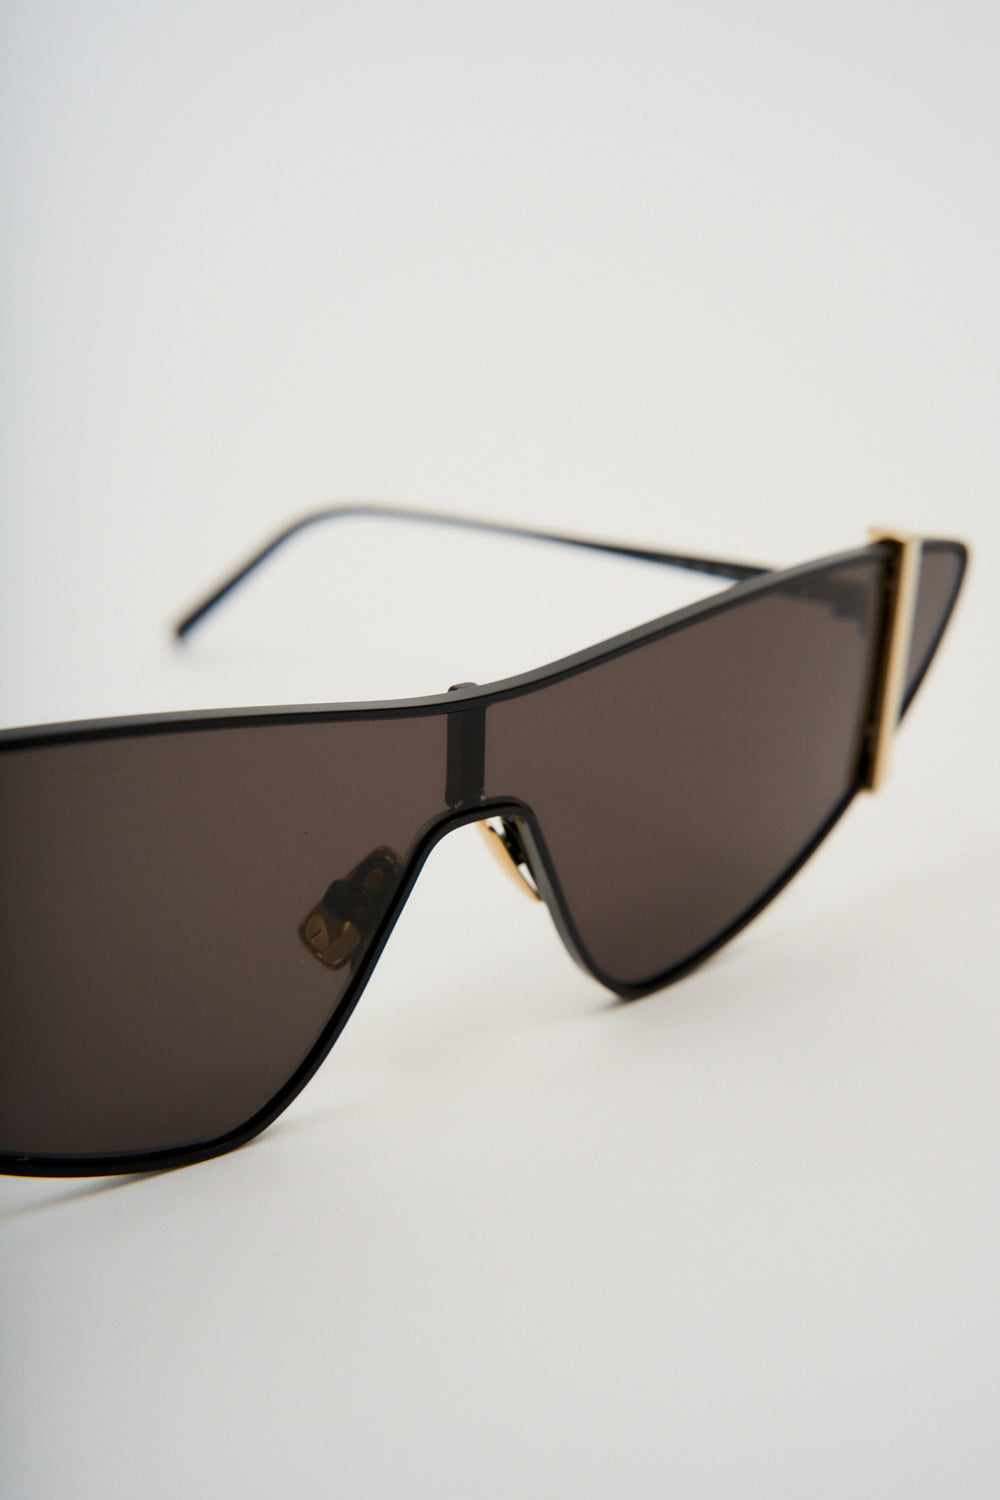 Mask Black Gold Sunglasses